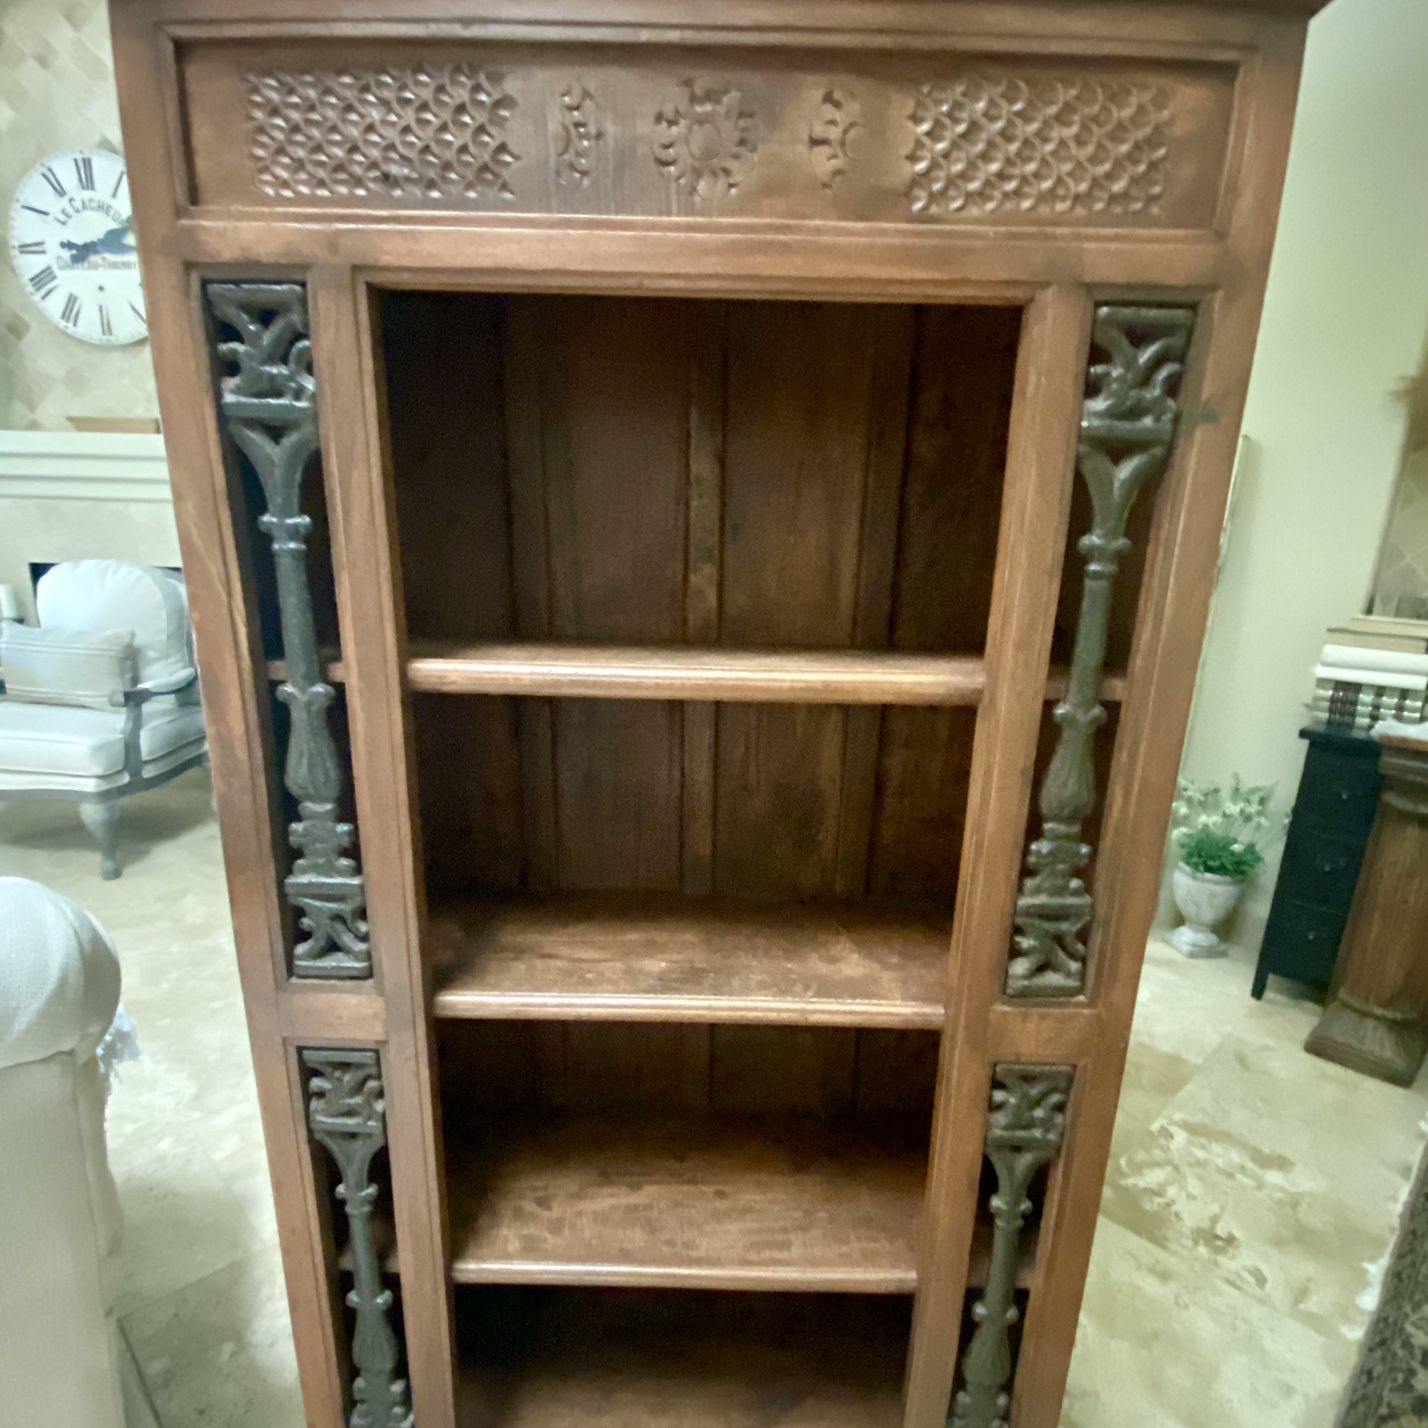 Ornate Solid Wood & Iron Bookcase/Shelving units